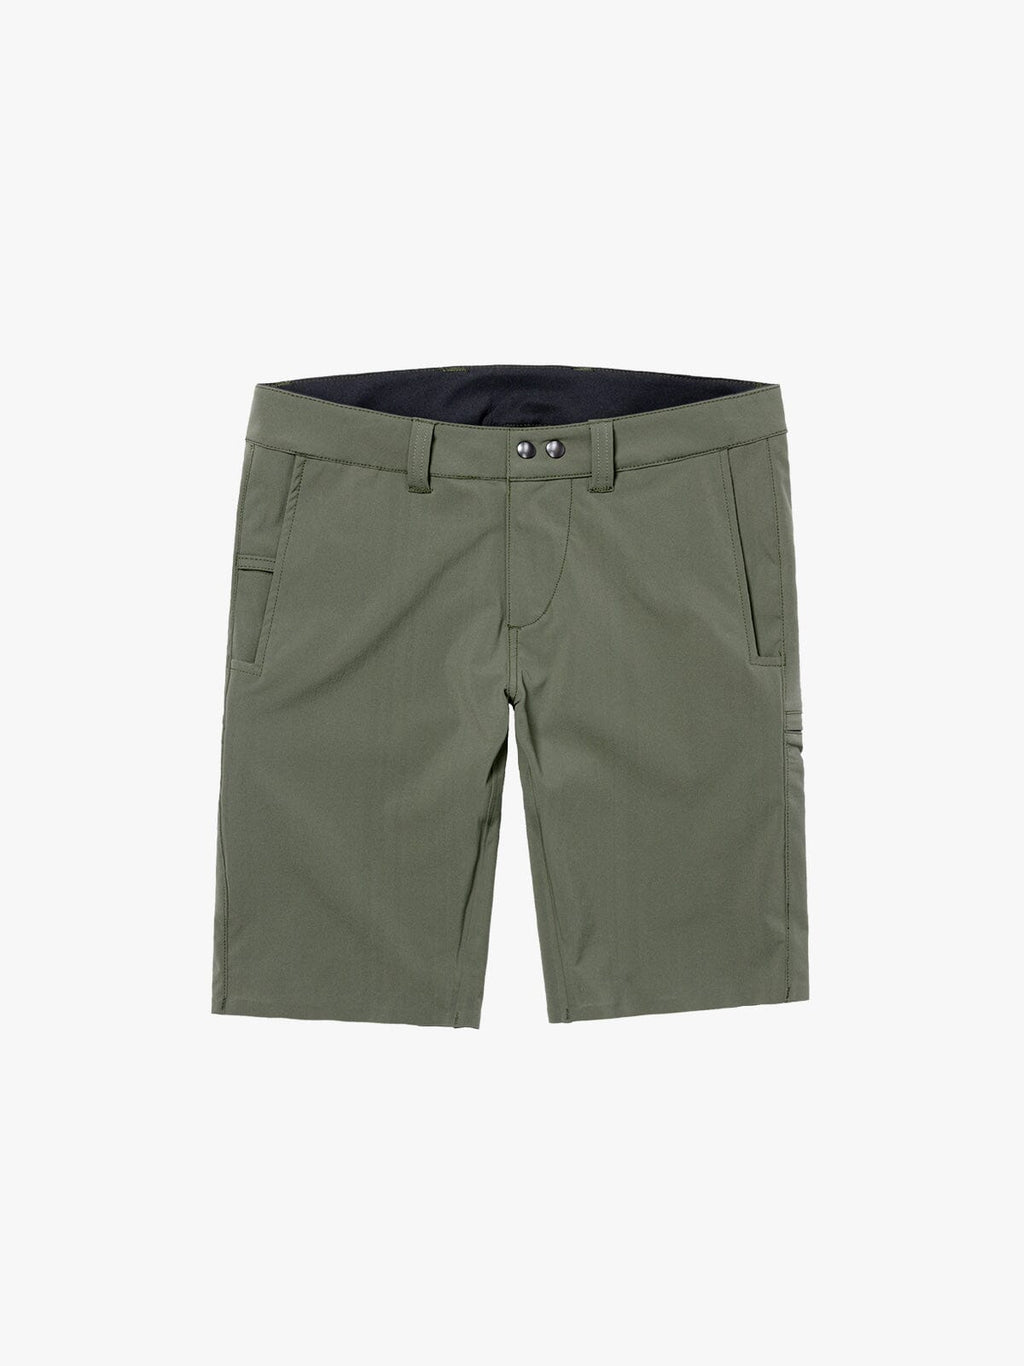 Apparel Traverse Hybrid Shorts 20 Khaki at  Men's Clothing